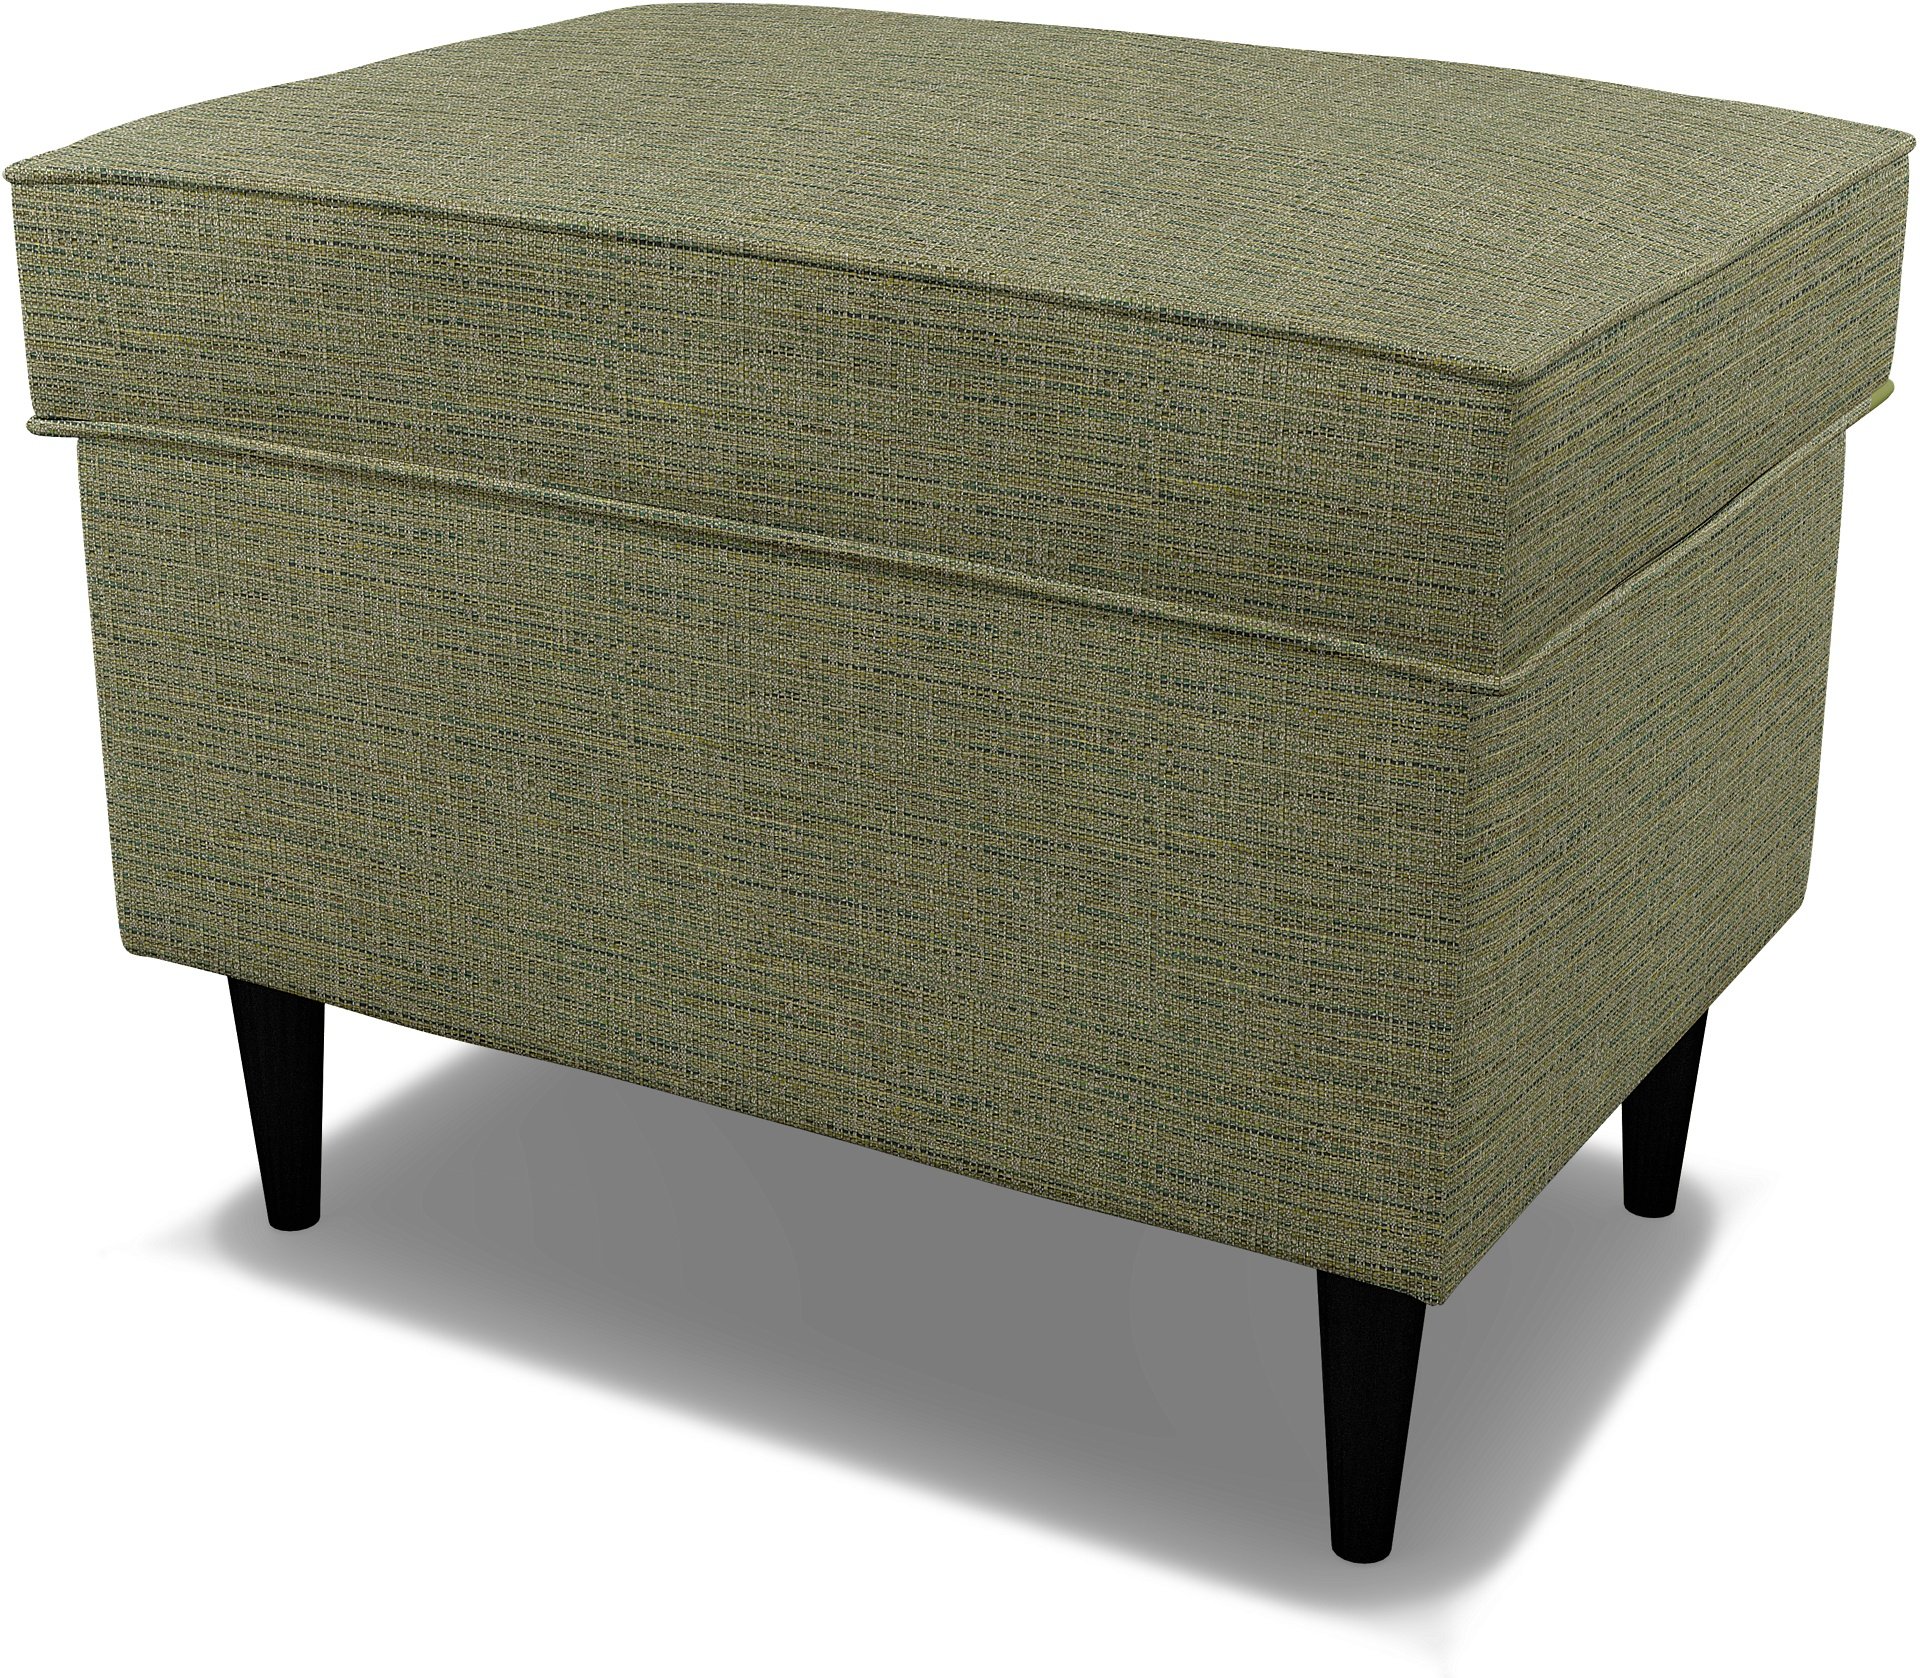 IKEA - Strandmon Footstool cover, Meadow Green, Boucle & Texture - Bemz